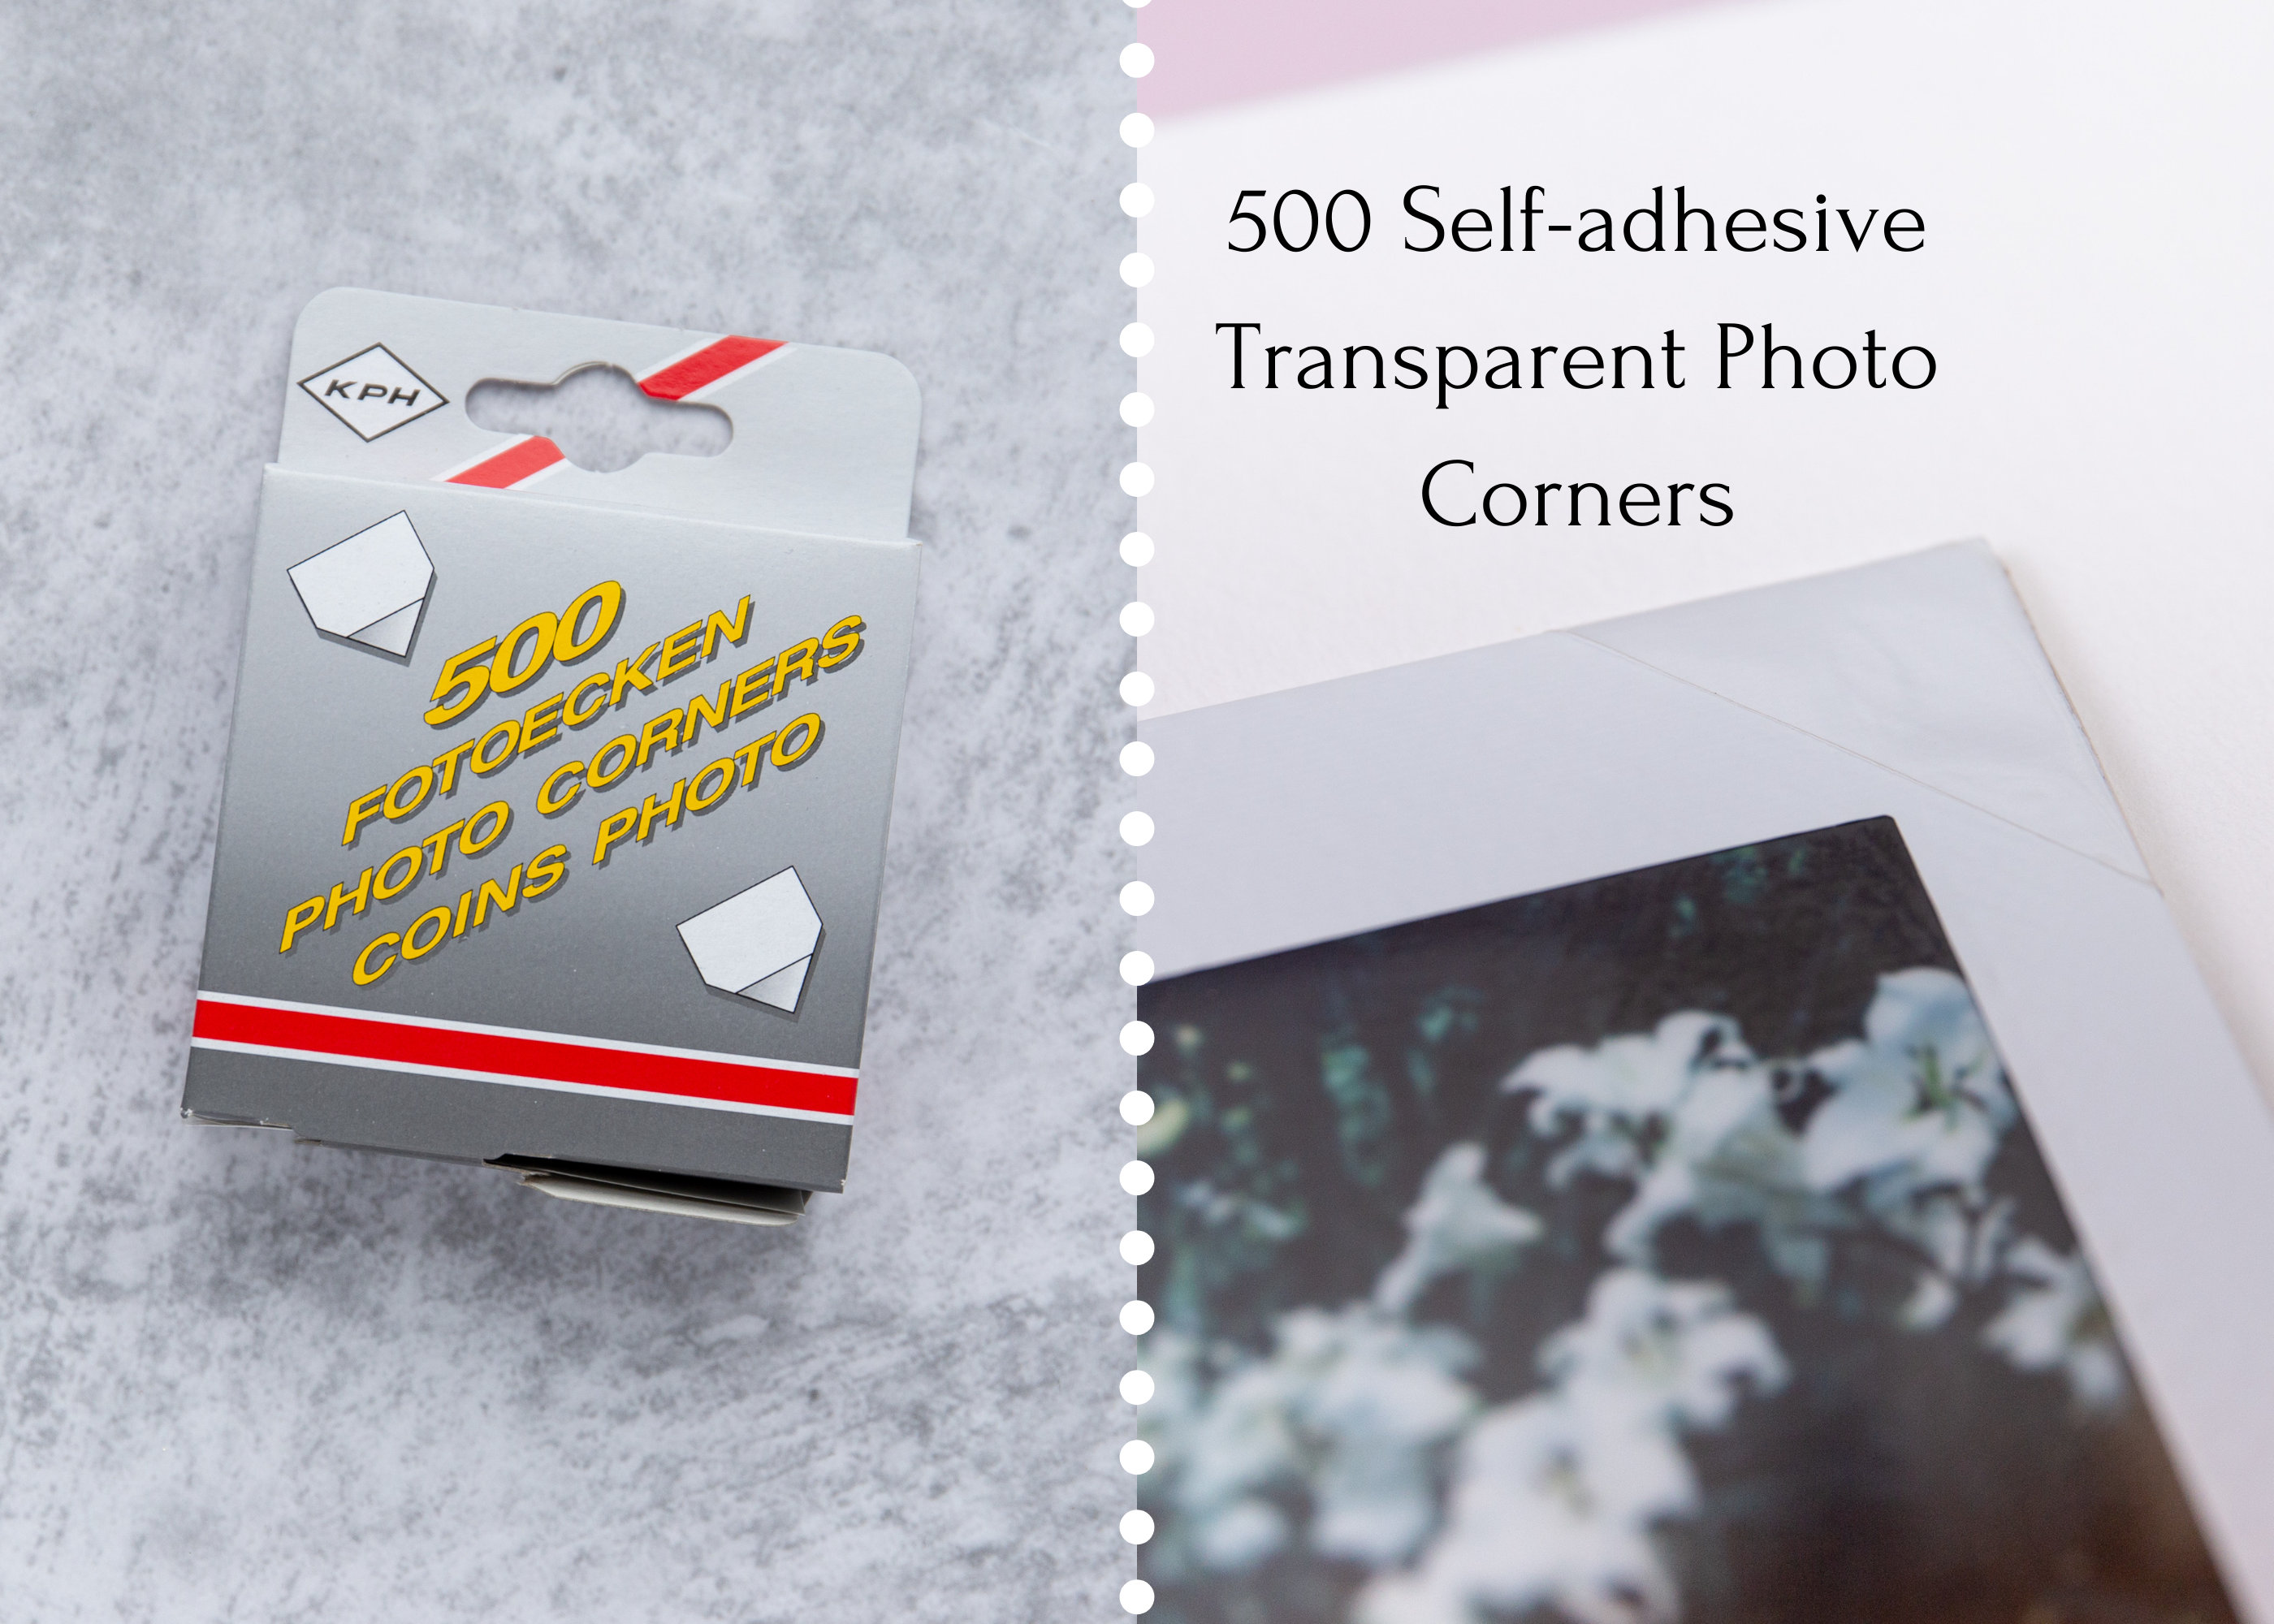 500 Self-adhesive Photo Corners. Transparent Photo Corners 500 - Etsy